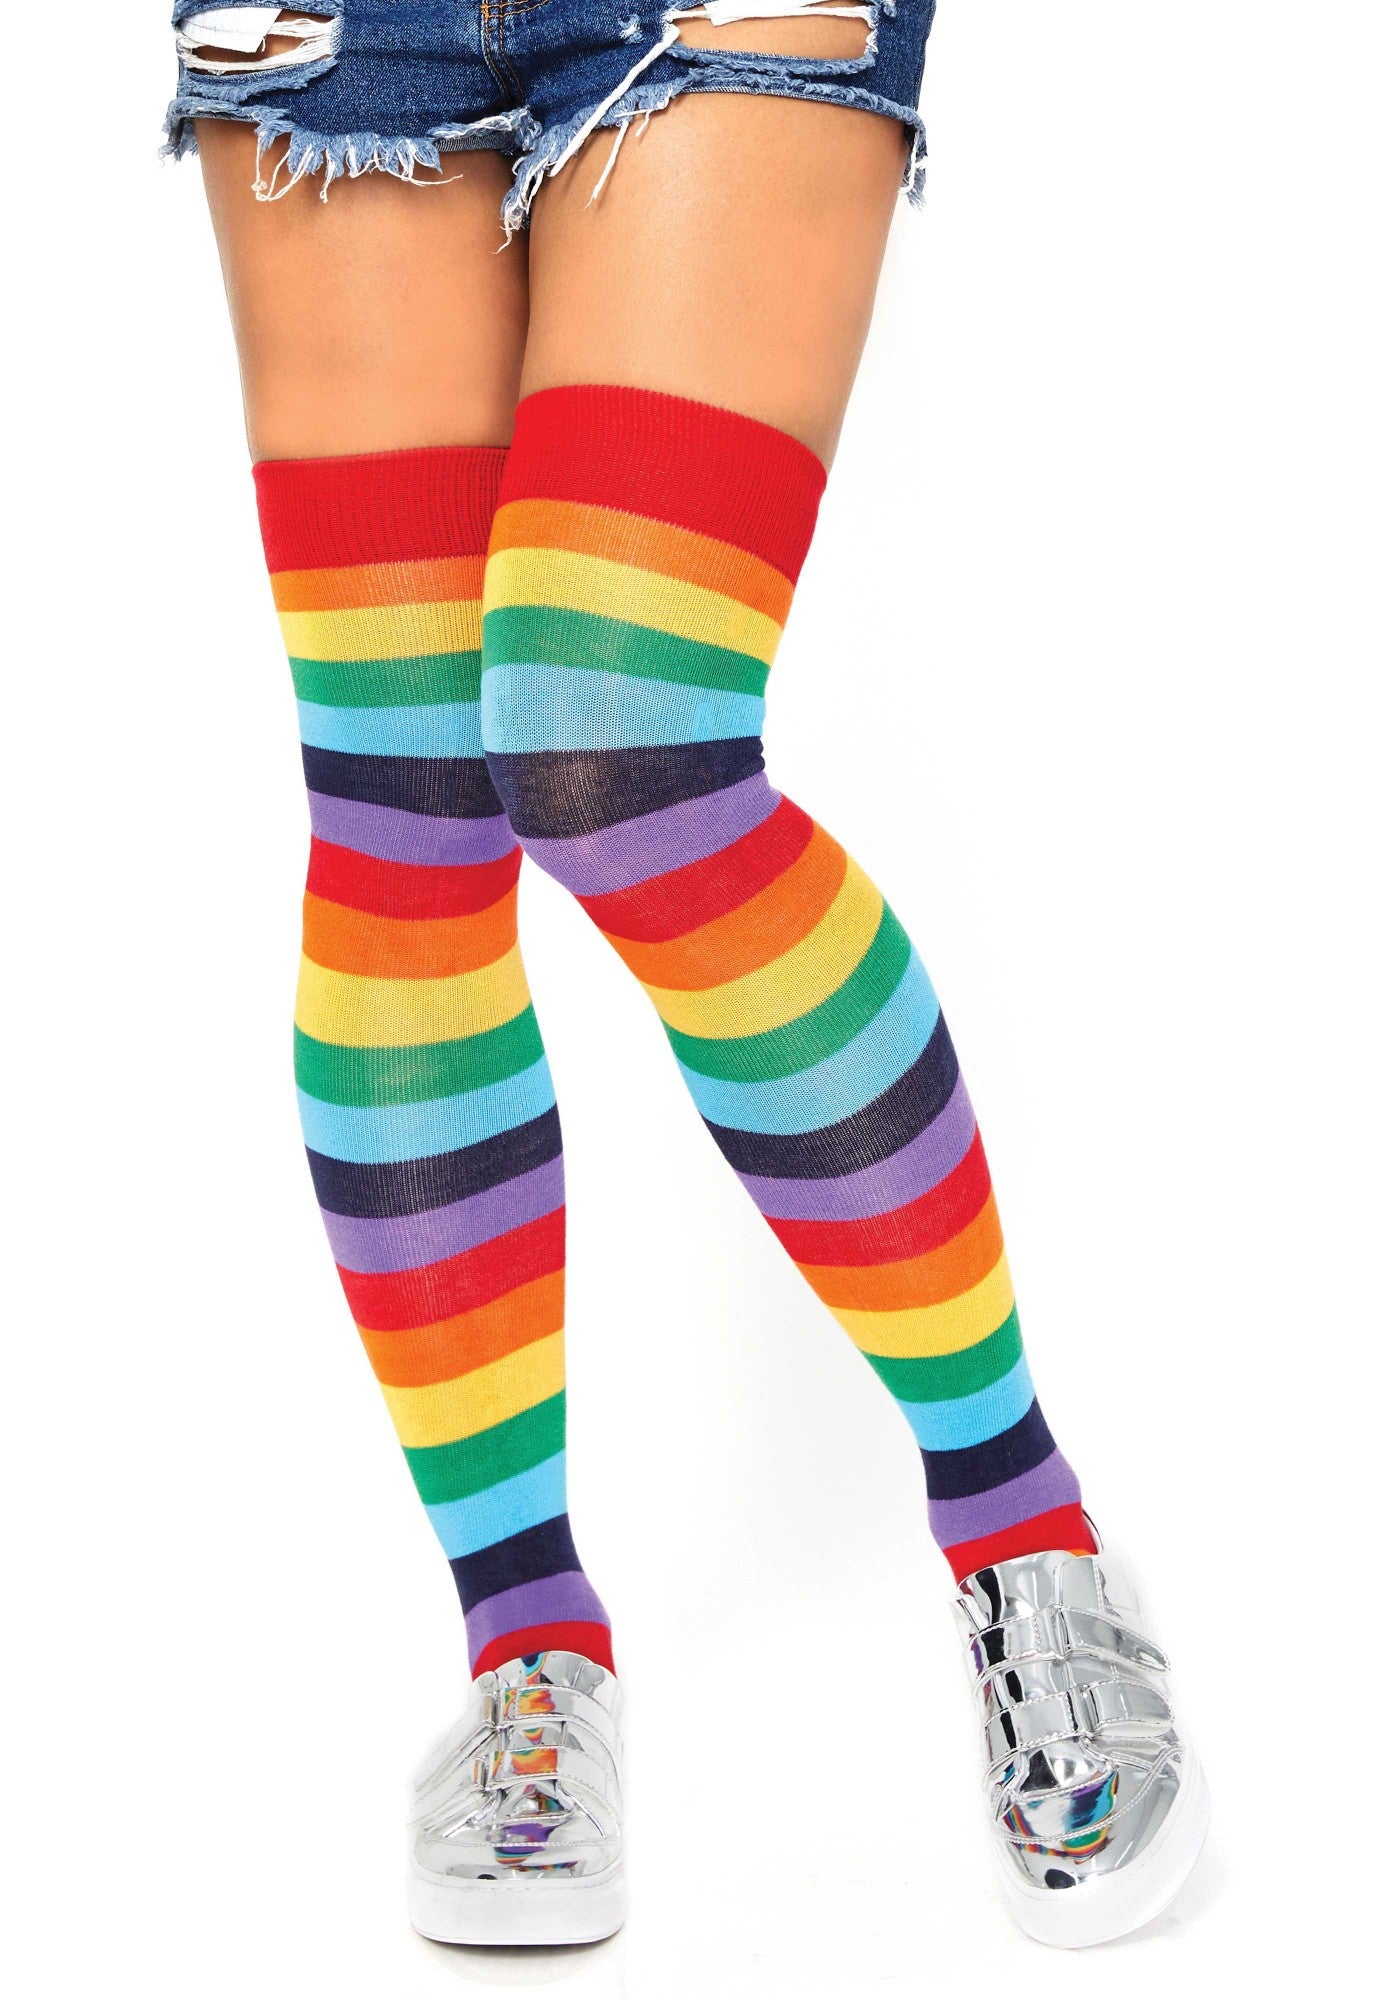 Leg Avenue 6606 Rainbow over the knee socks - multi-coloured horizontal stripe thigh high socks